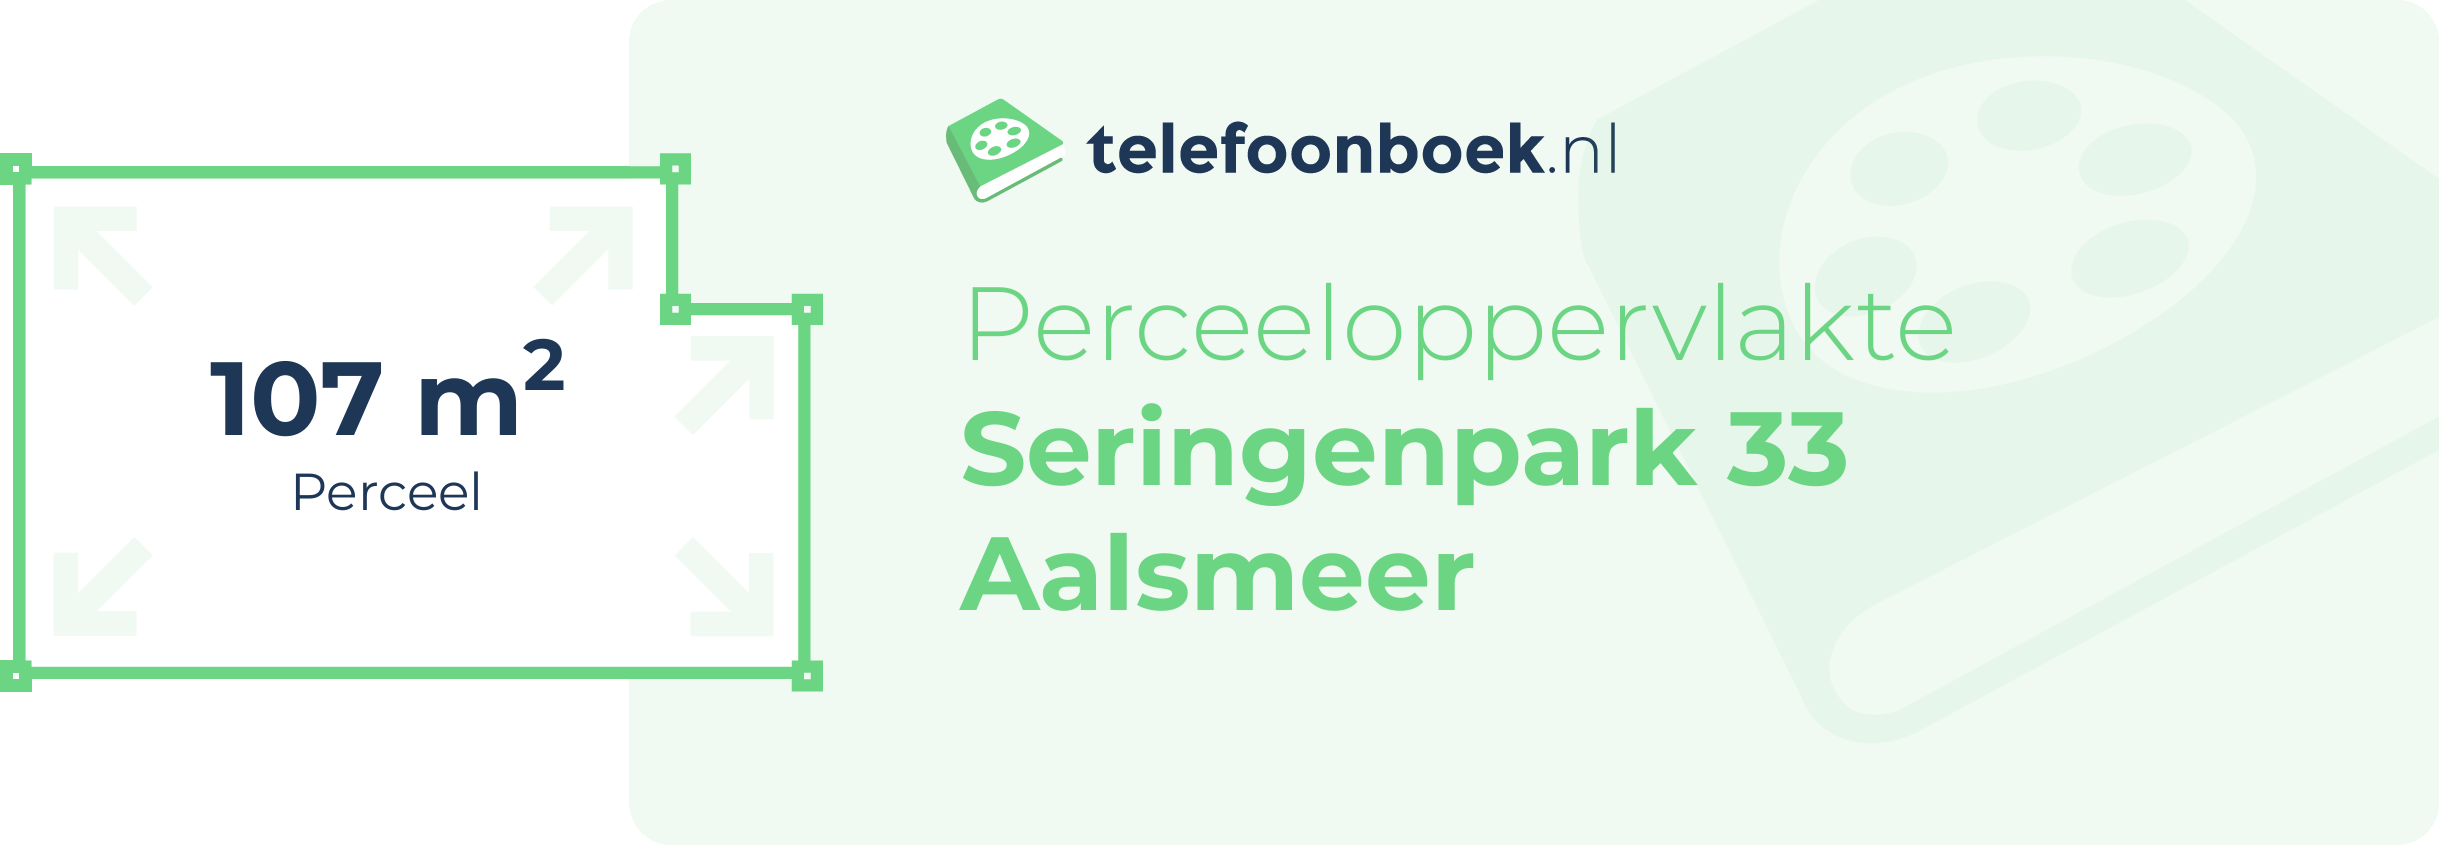 Perceeloppervlakte Seringenpark 33 Aalsmeer